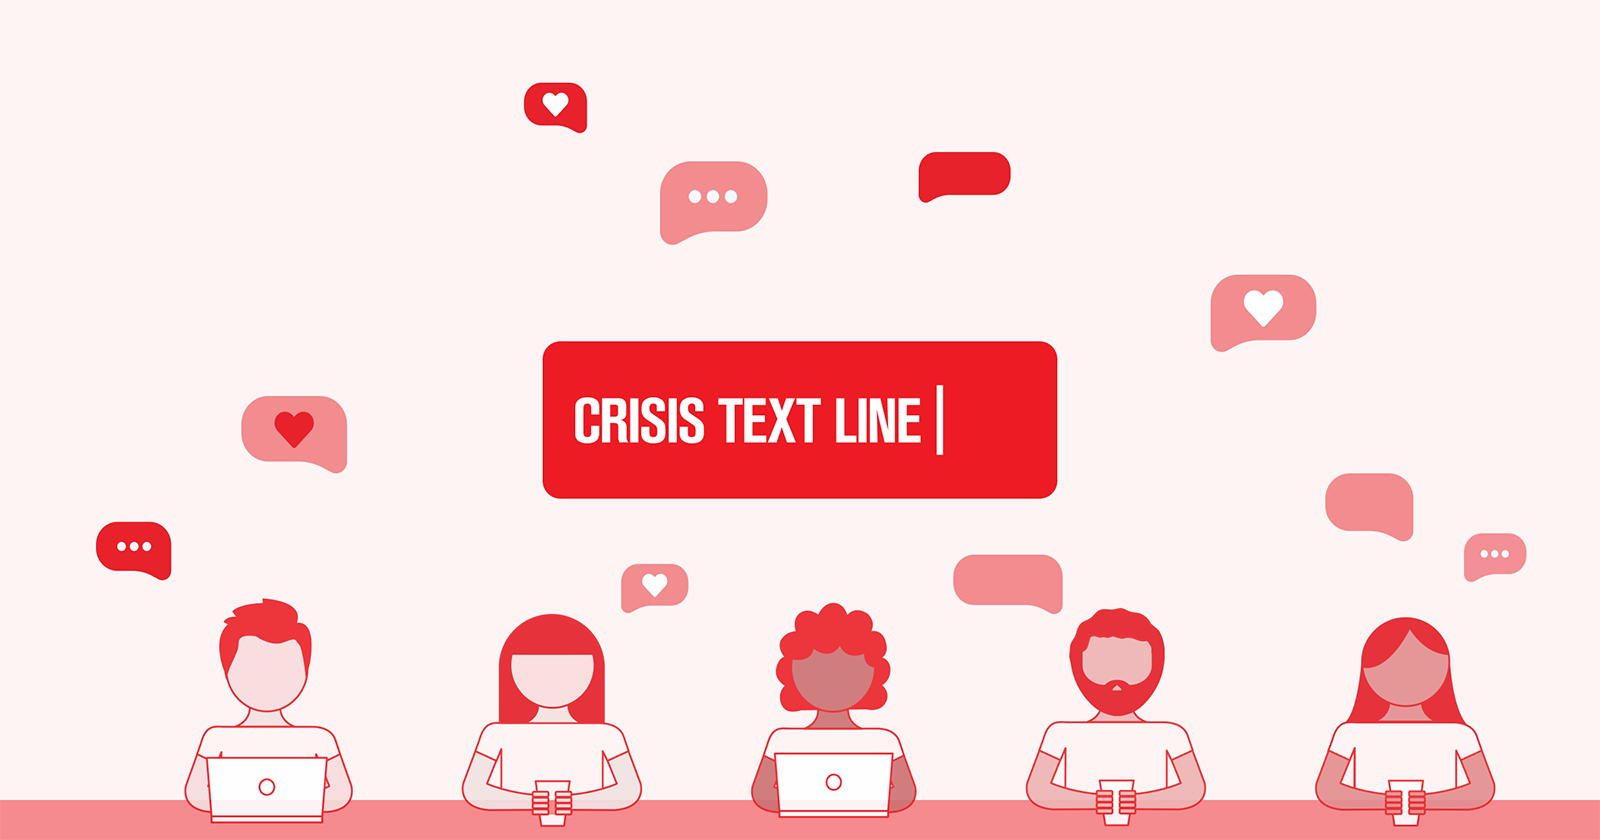 www.crisistextline.org